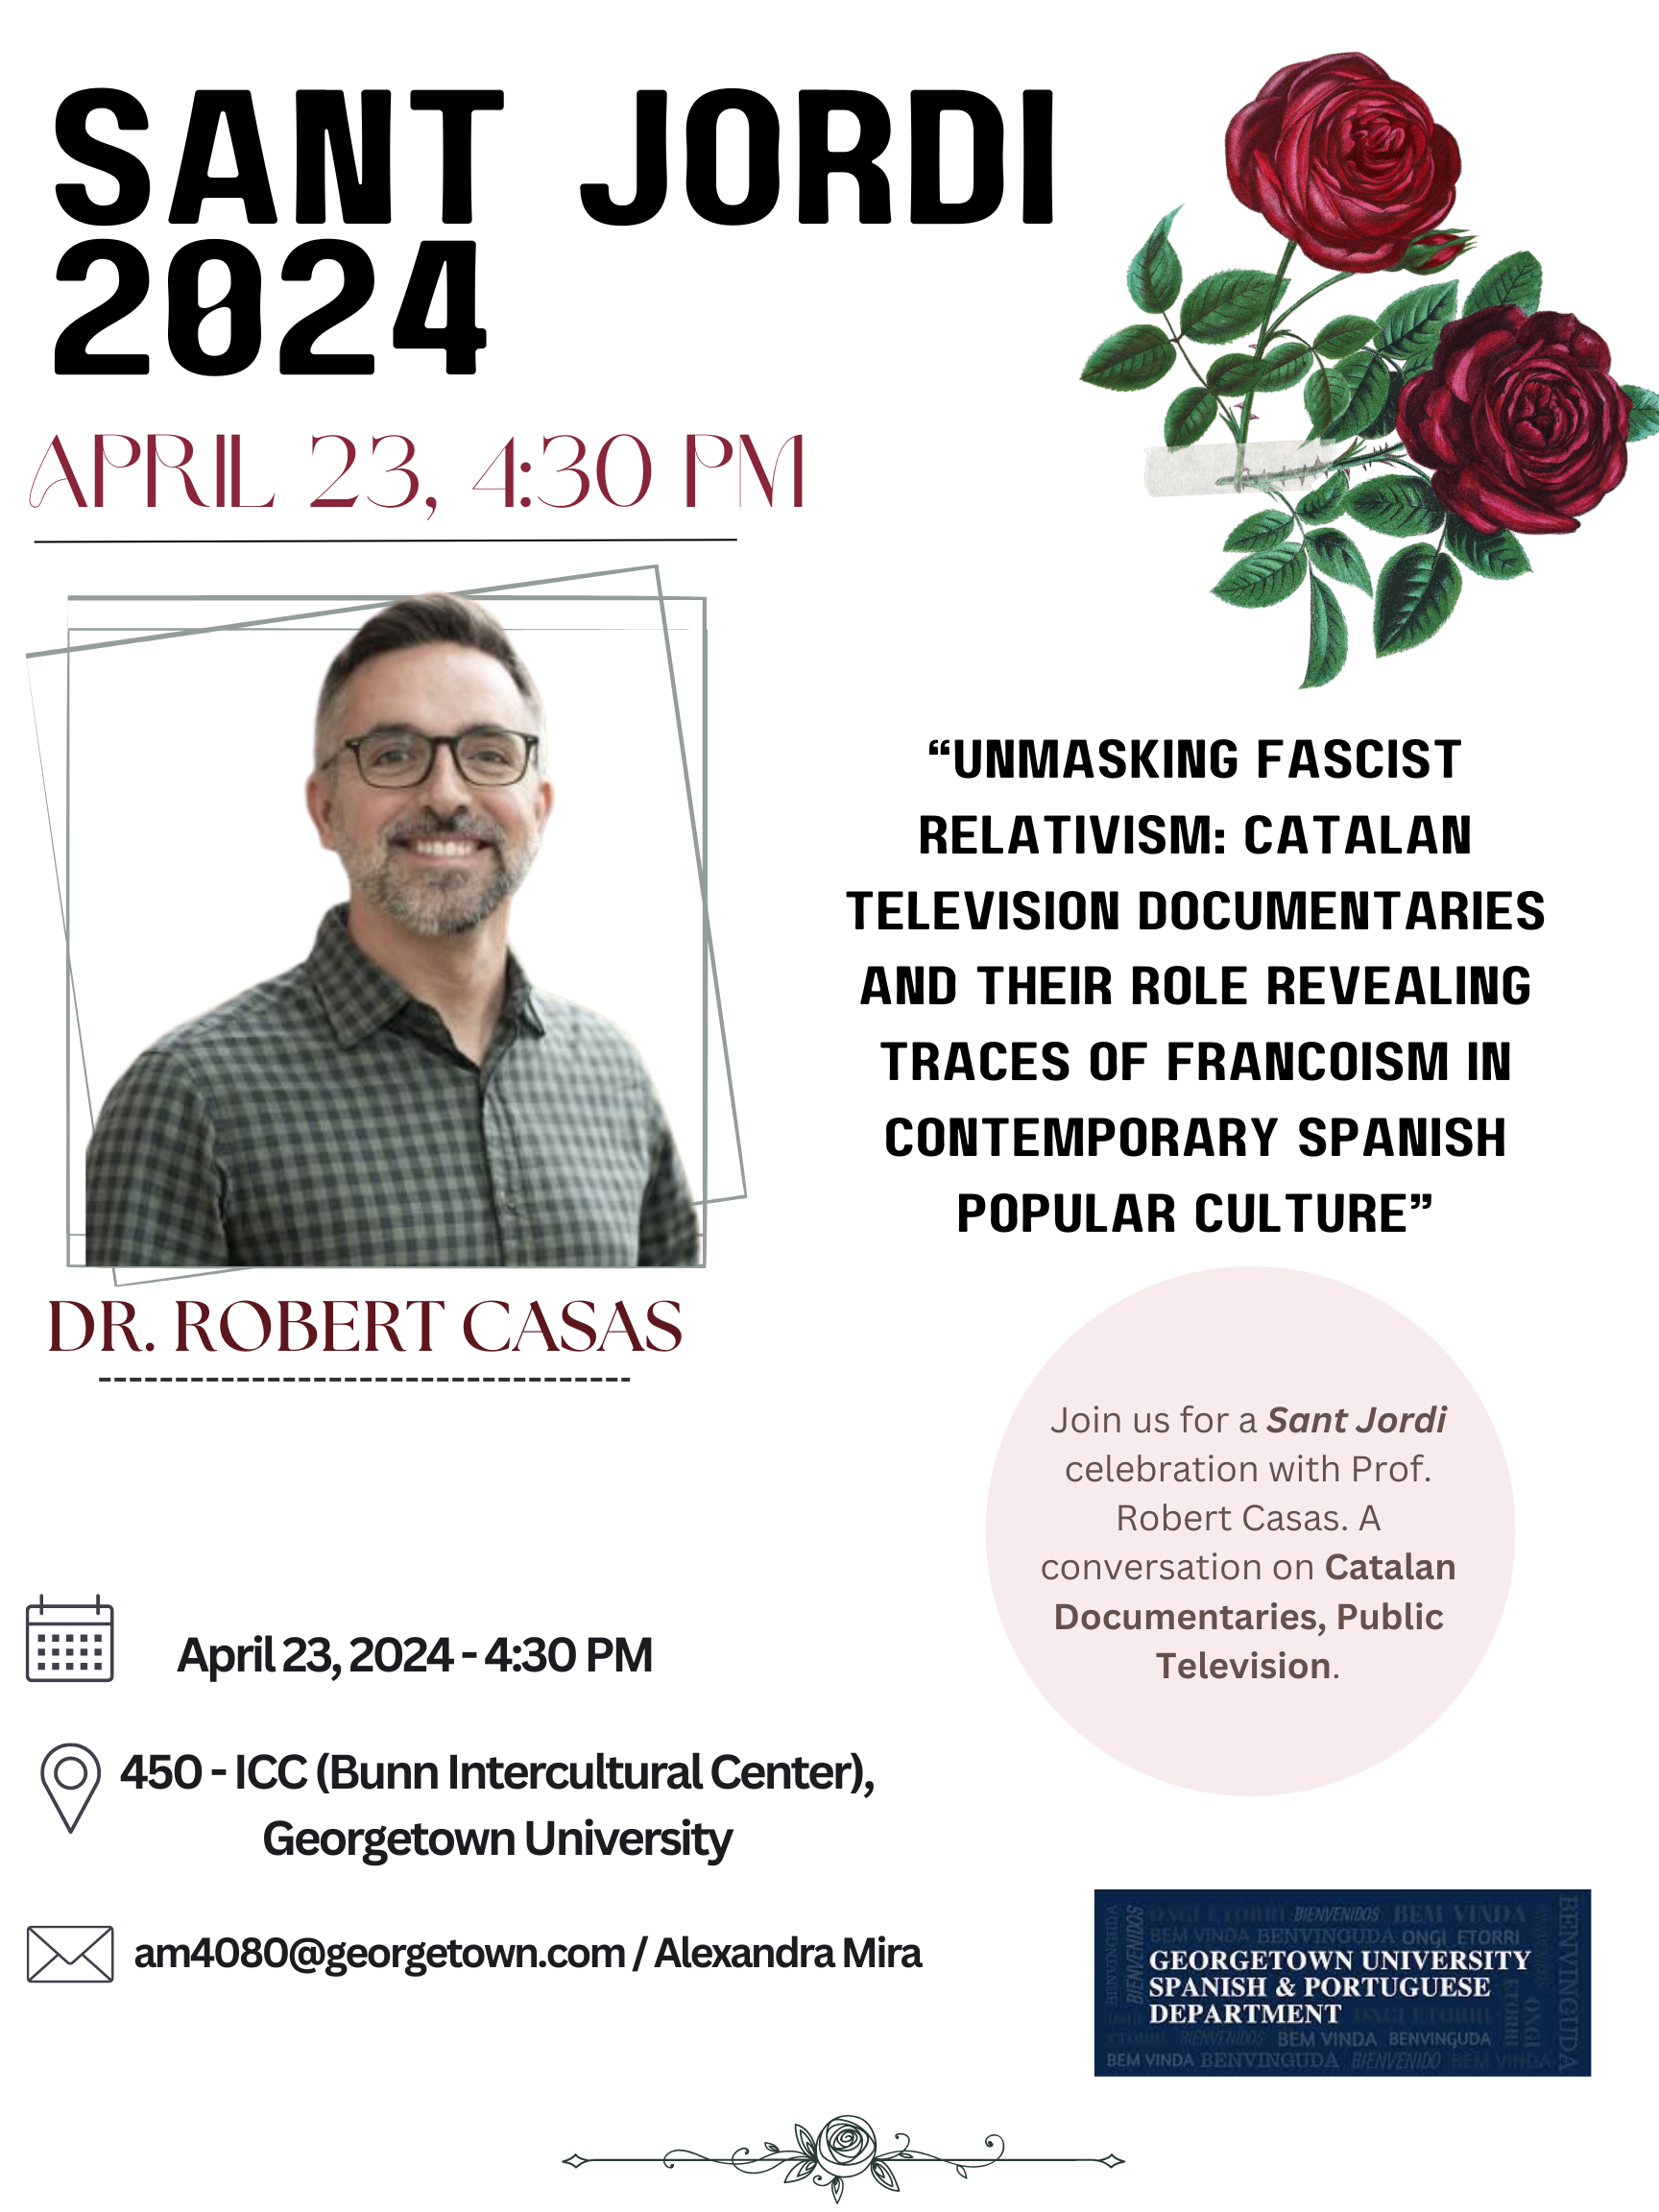 Sant Jordi celebration with Prof. Robert Casas poster art